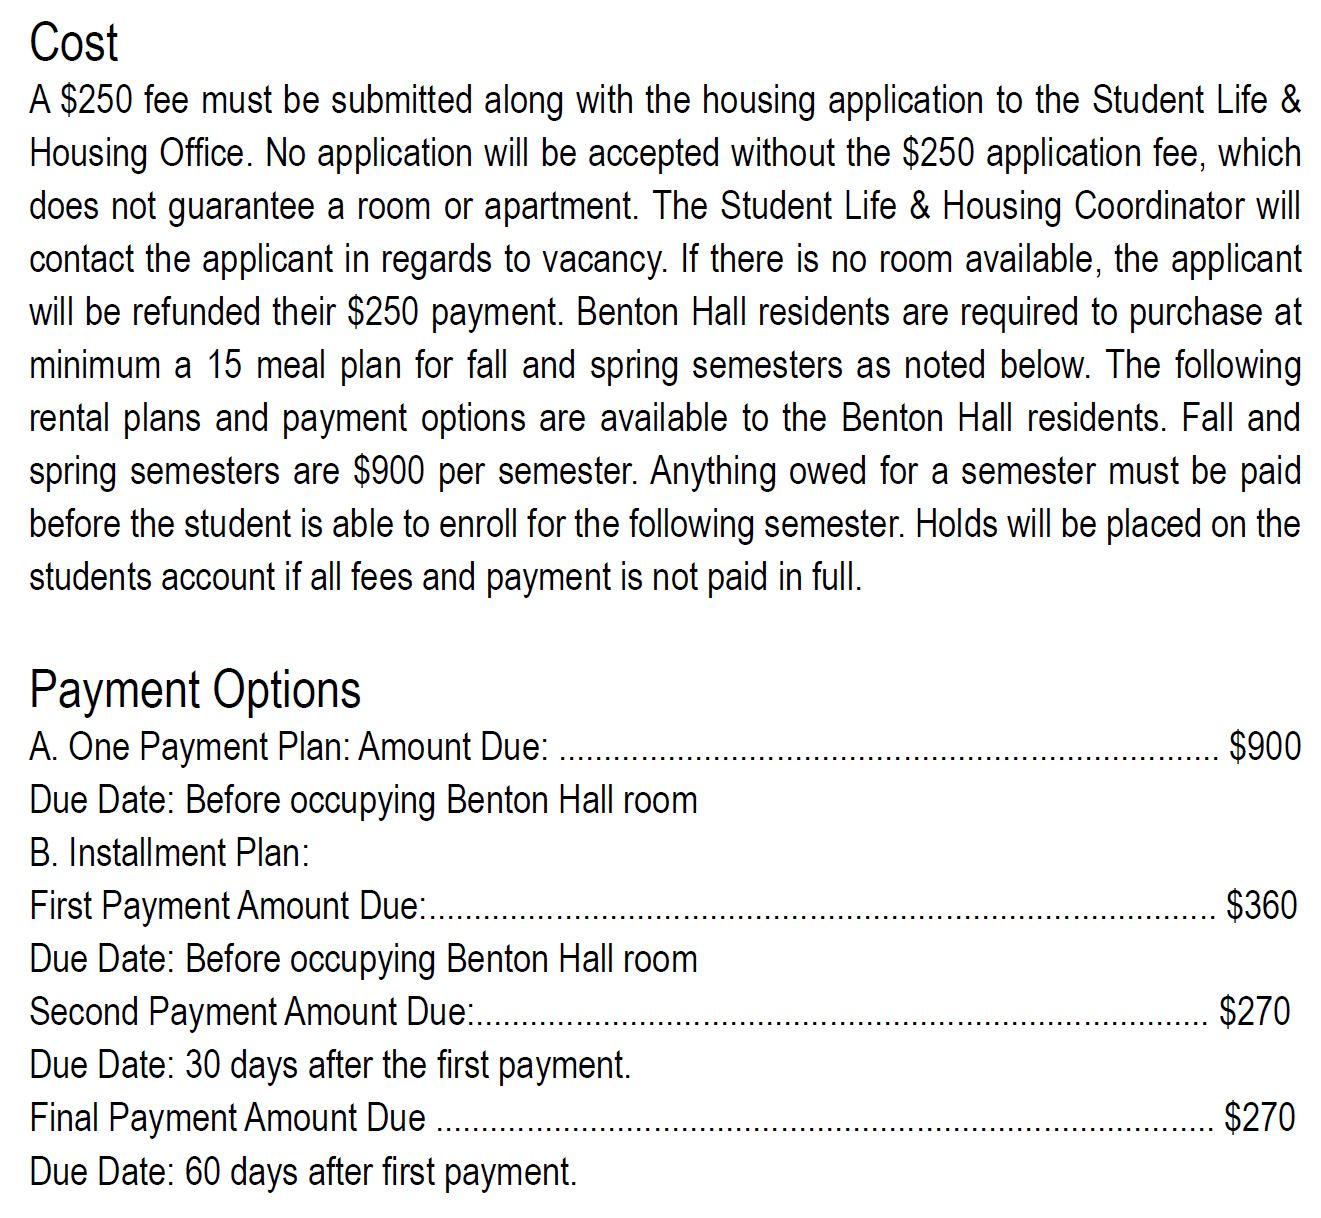 Benton Hall Cost_Payment Options